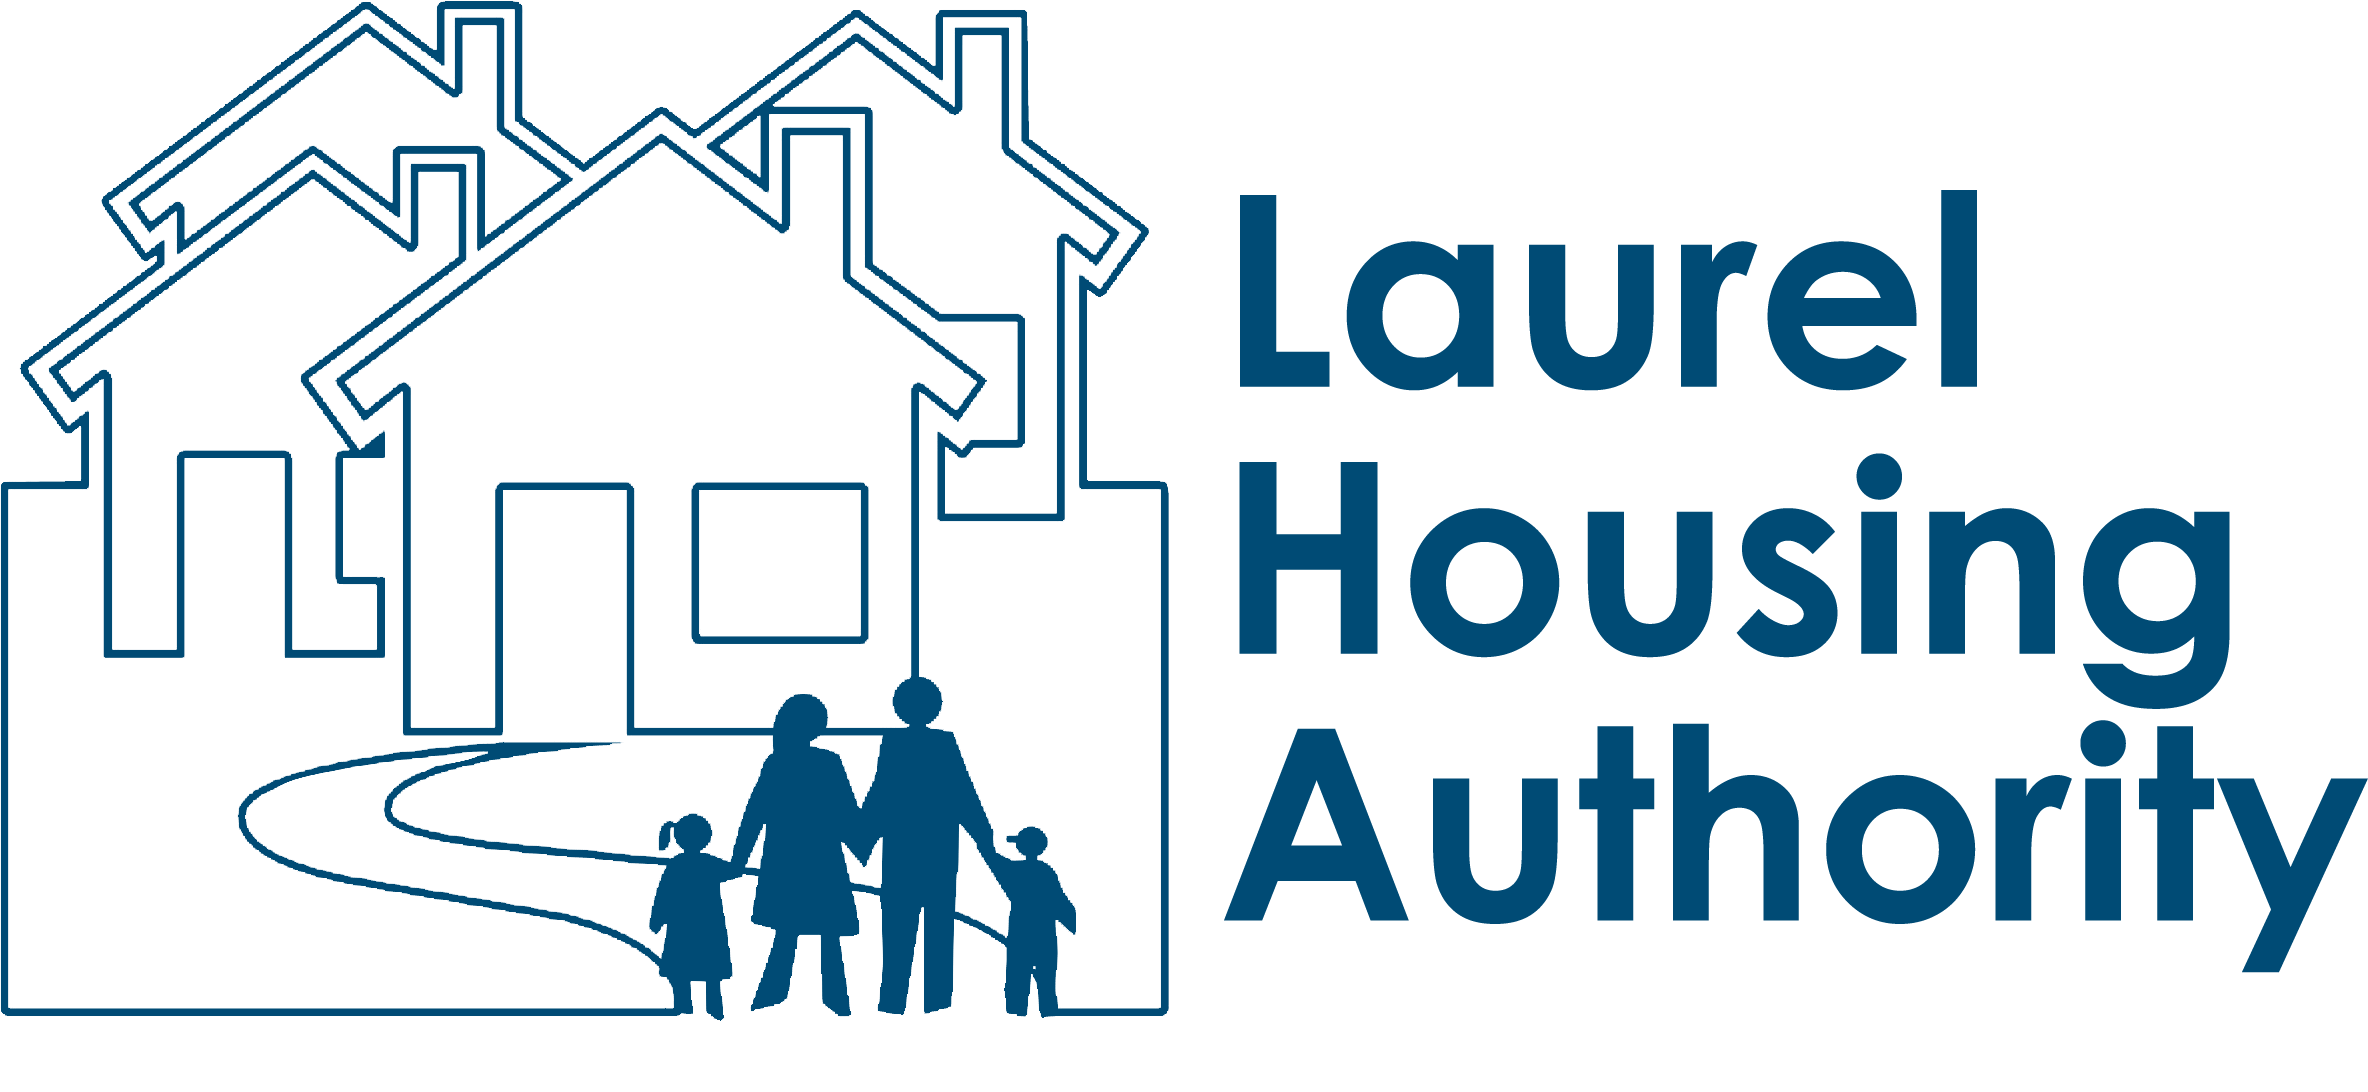 Laurel Housing Authority